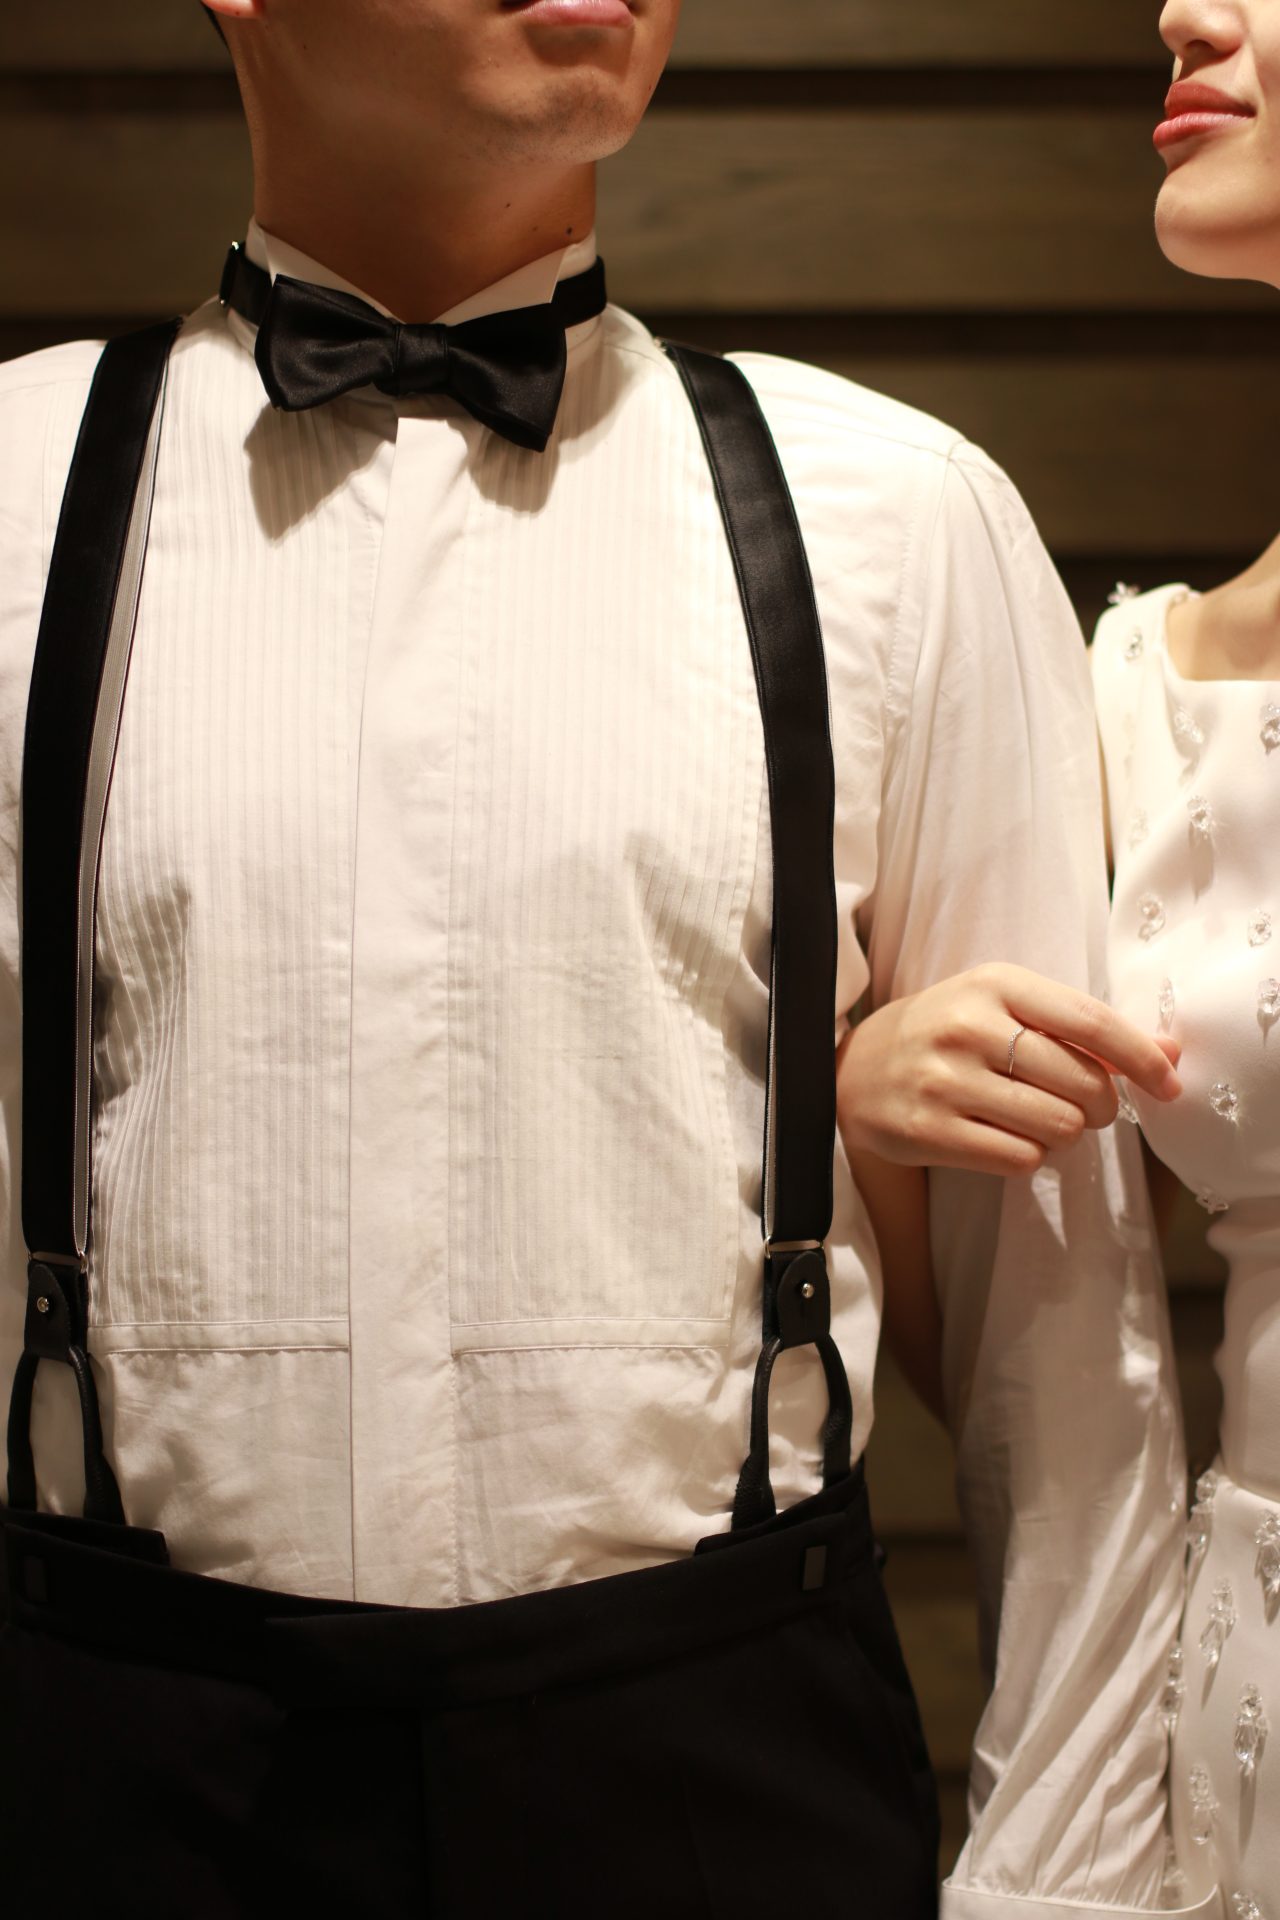 THETREATDRESSINGの提携会場パレスホテル東京などの格式あるホテルでの結婚式におススメの新郎様のスタイルは、ブラックのタキシードにプリーツシャツ、そしてブラックタイとサスペンダーを合わせた装いです 